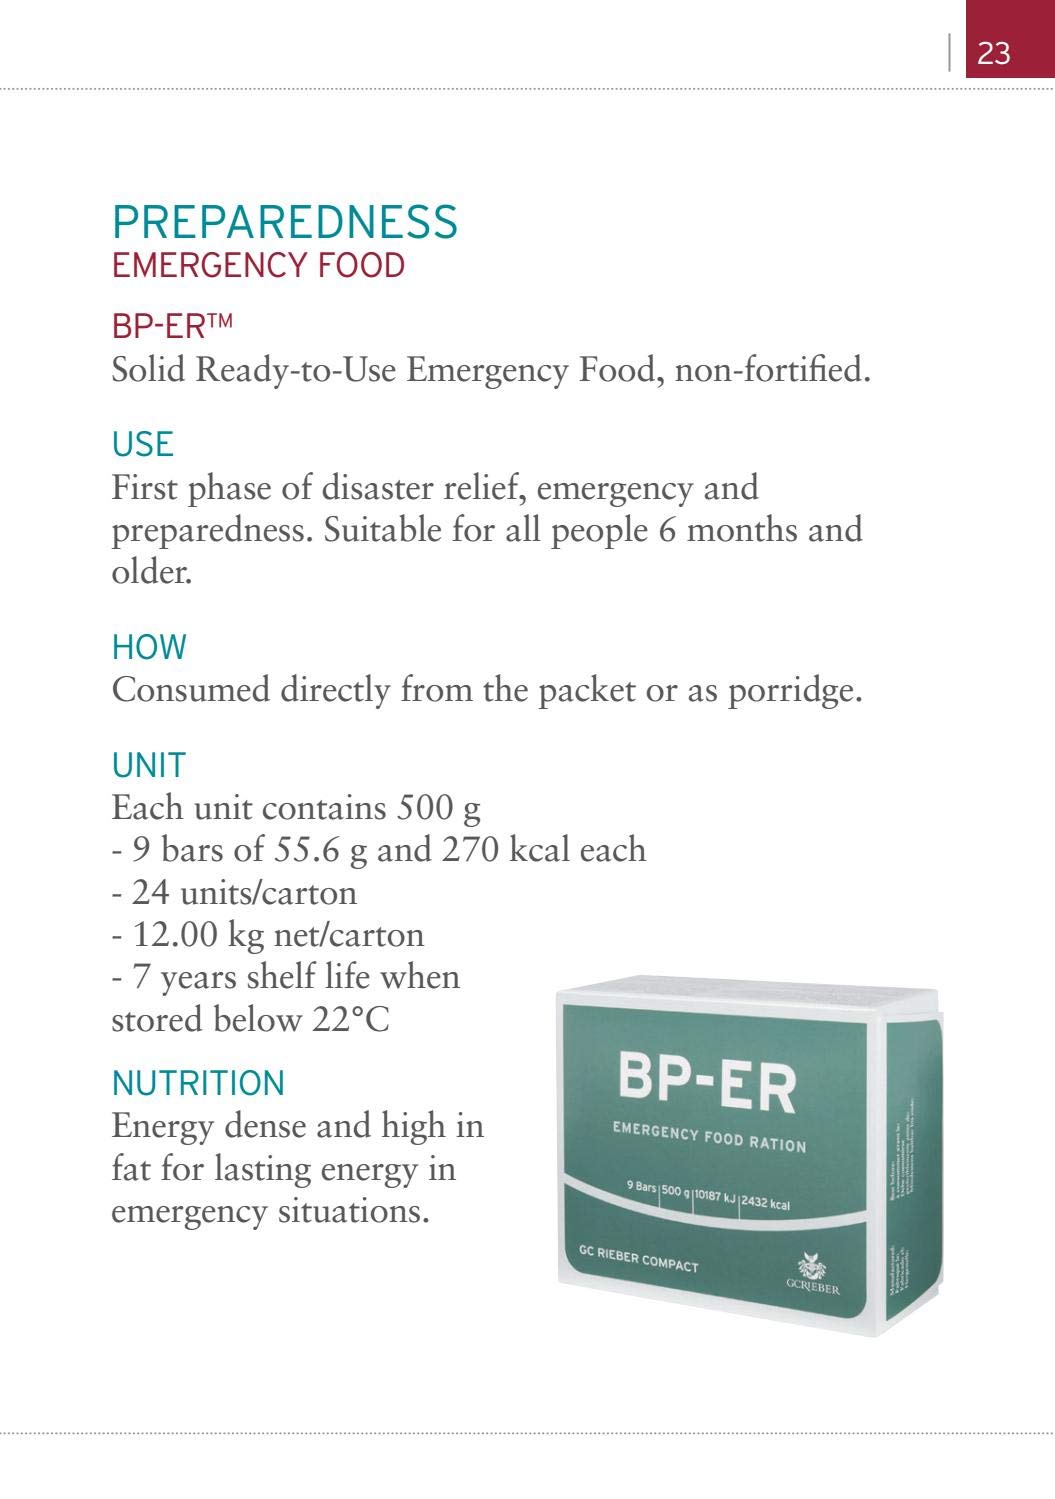 Ración de emergencia BP-ER - Ración de emergencia compacta, duradera y ligera BP-ER